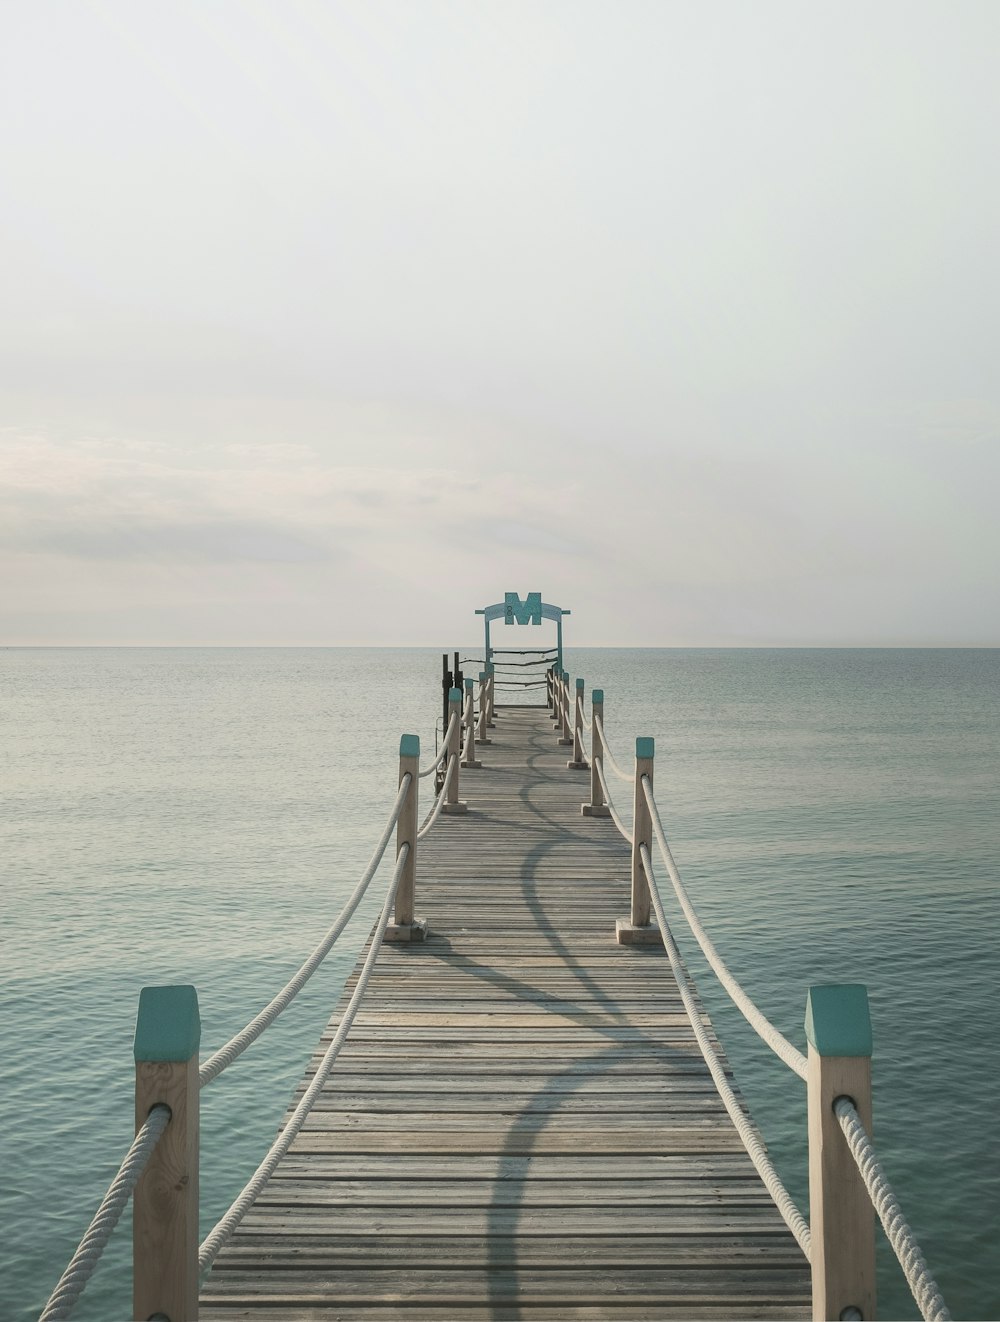 brown wooden pier near body of calm water